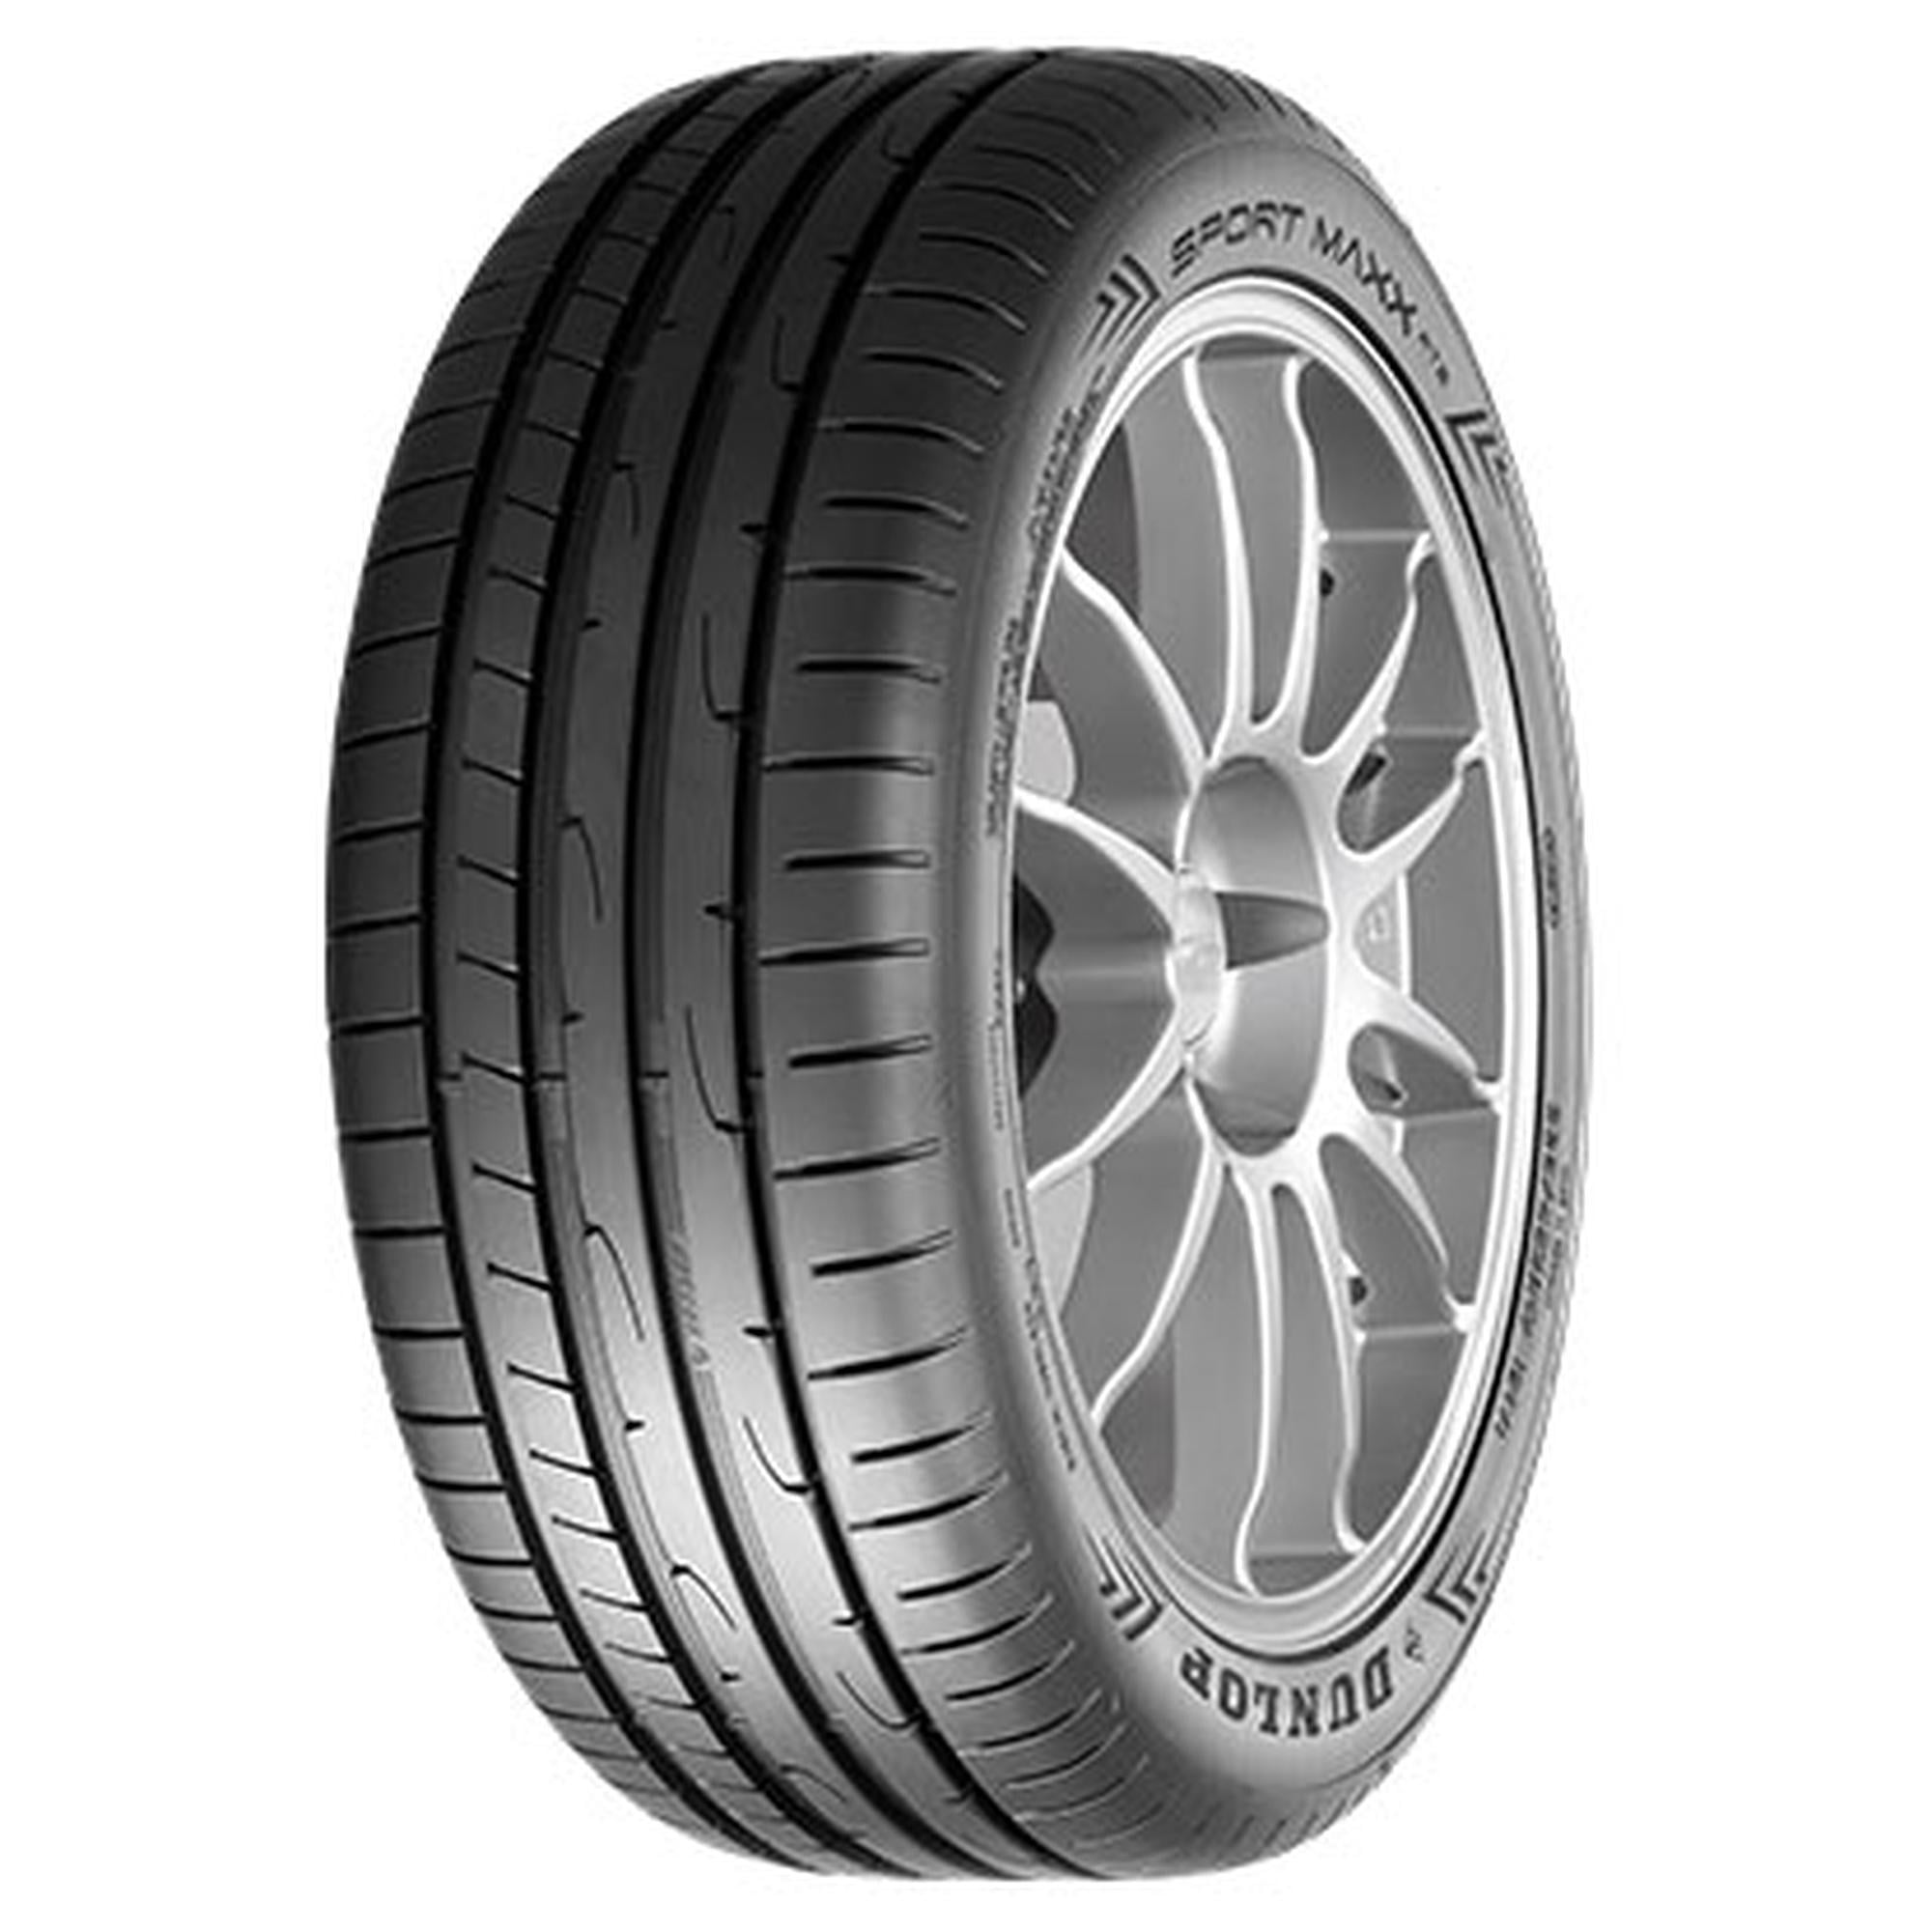 Base, 94Y BMW Sport Tire Dunlop V Fits: 2011 Maxx Cadillac 2016-19 Performance 328i Rt2 255/35ZR18 ATS